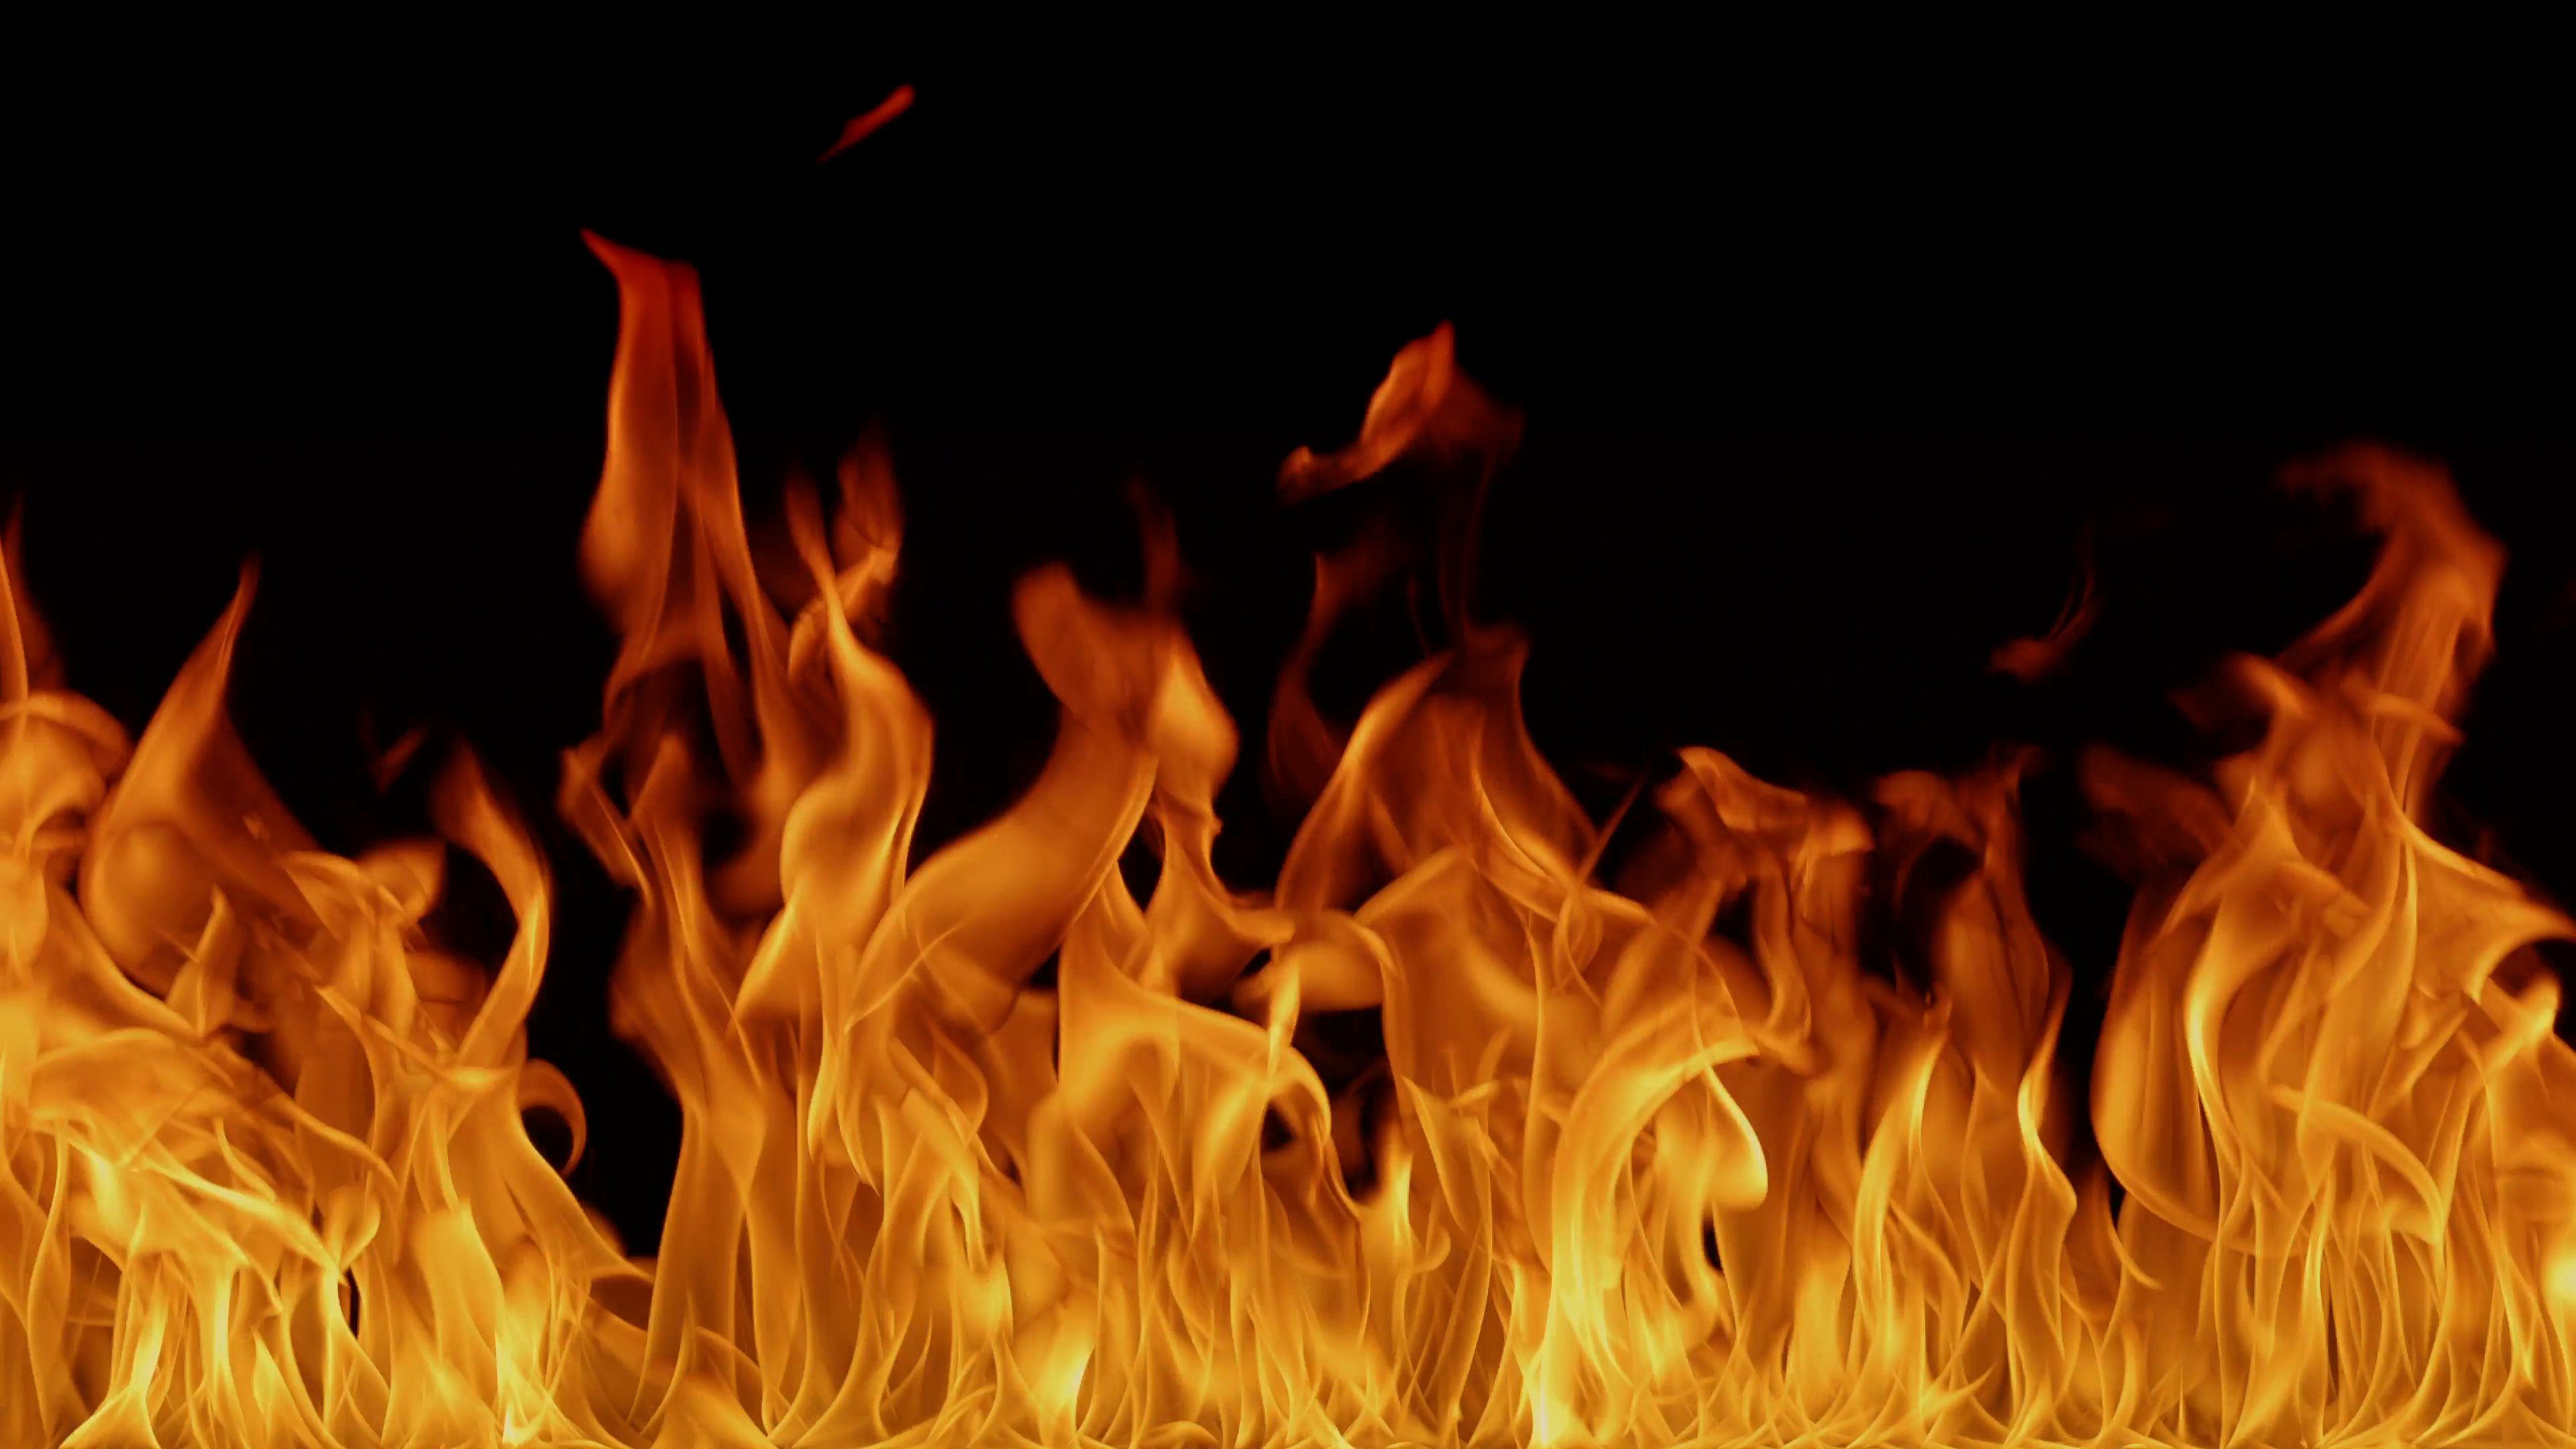 Fire Wallpapers Full Hd - Fondo de fuego 1080p (# 126662) - HD